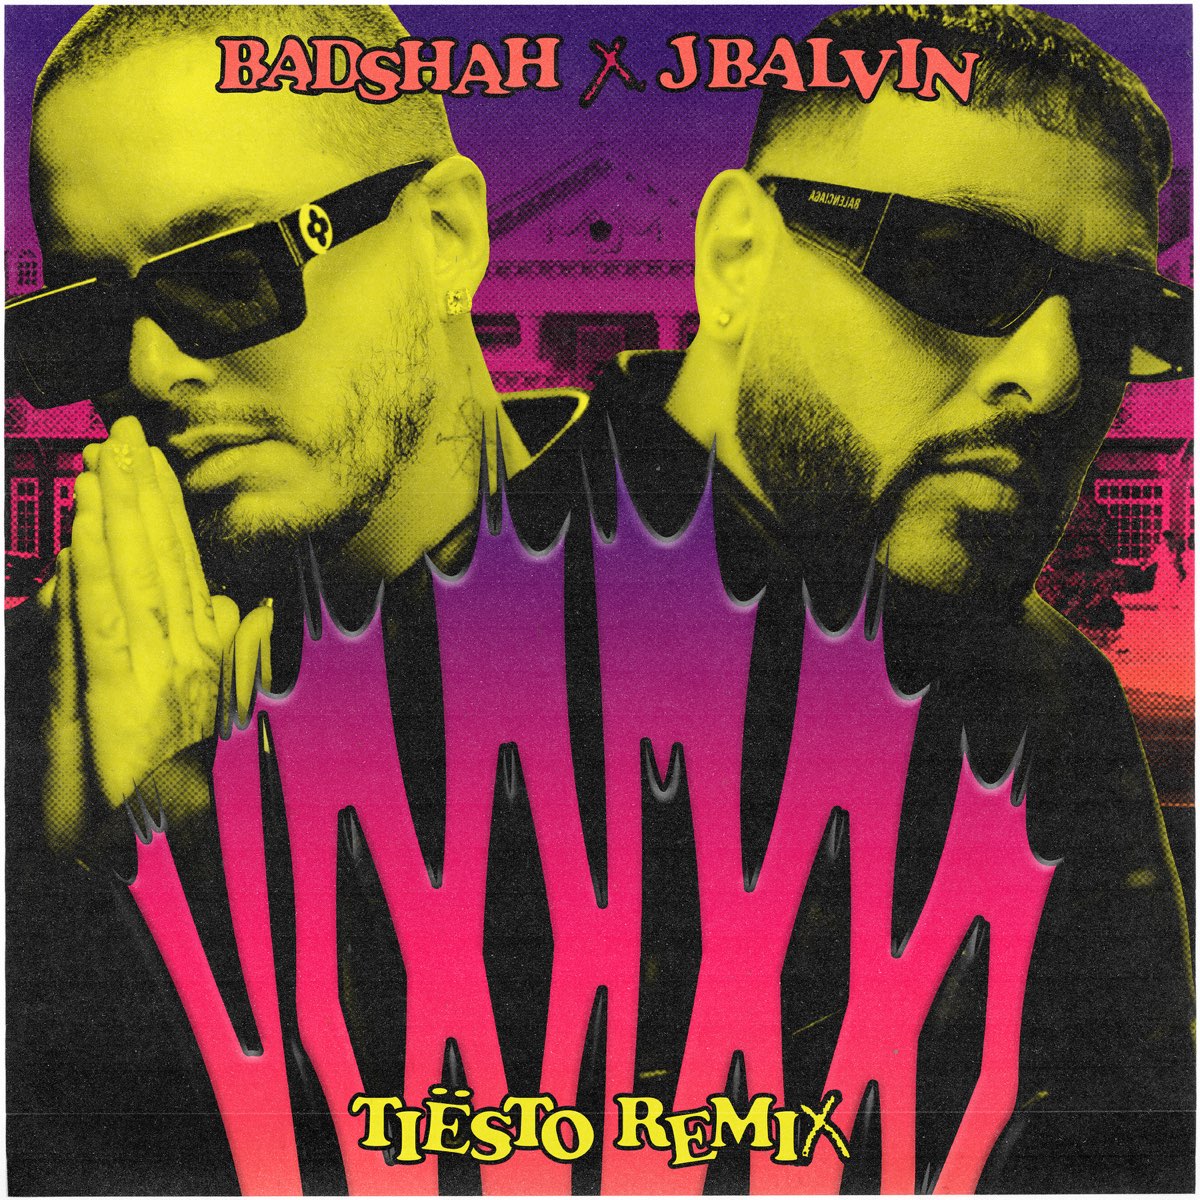 Voodoo (Tiësto Remix) - Single by Badshah, J Balvin & Tiësto on Apple Music